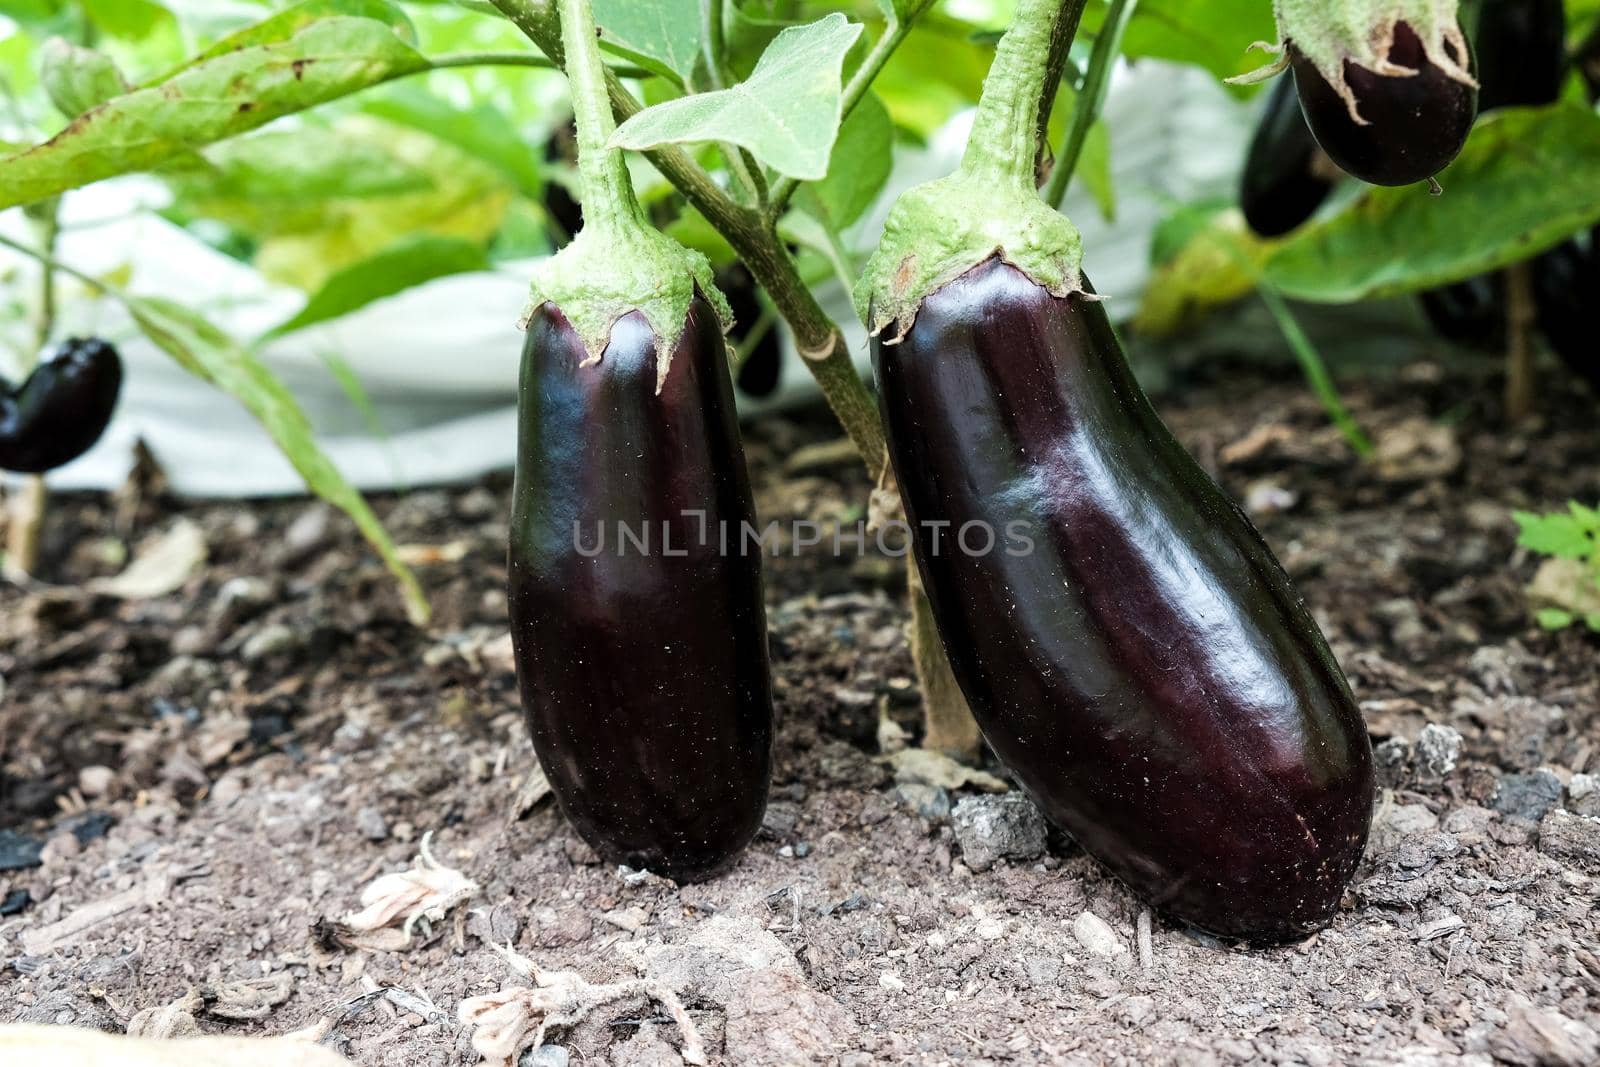 Eggplant fruits growing in the vegetable garden.